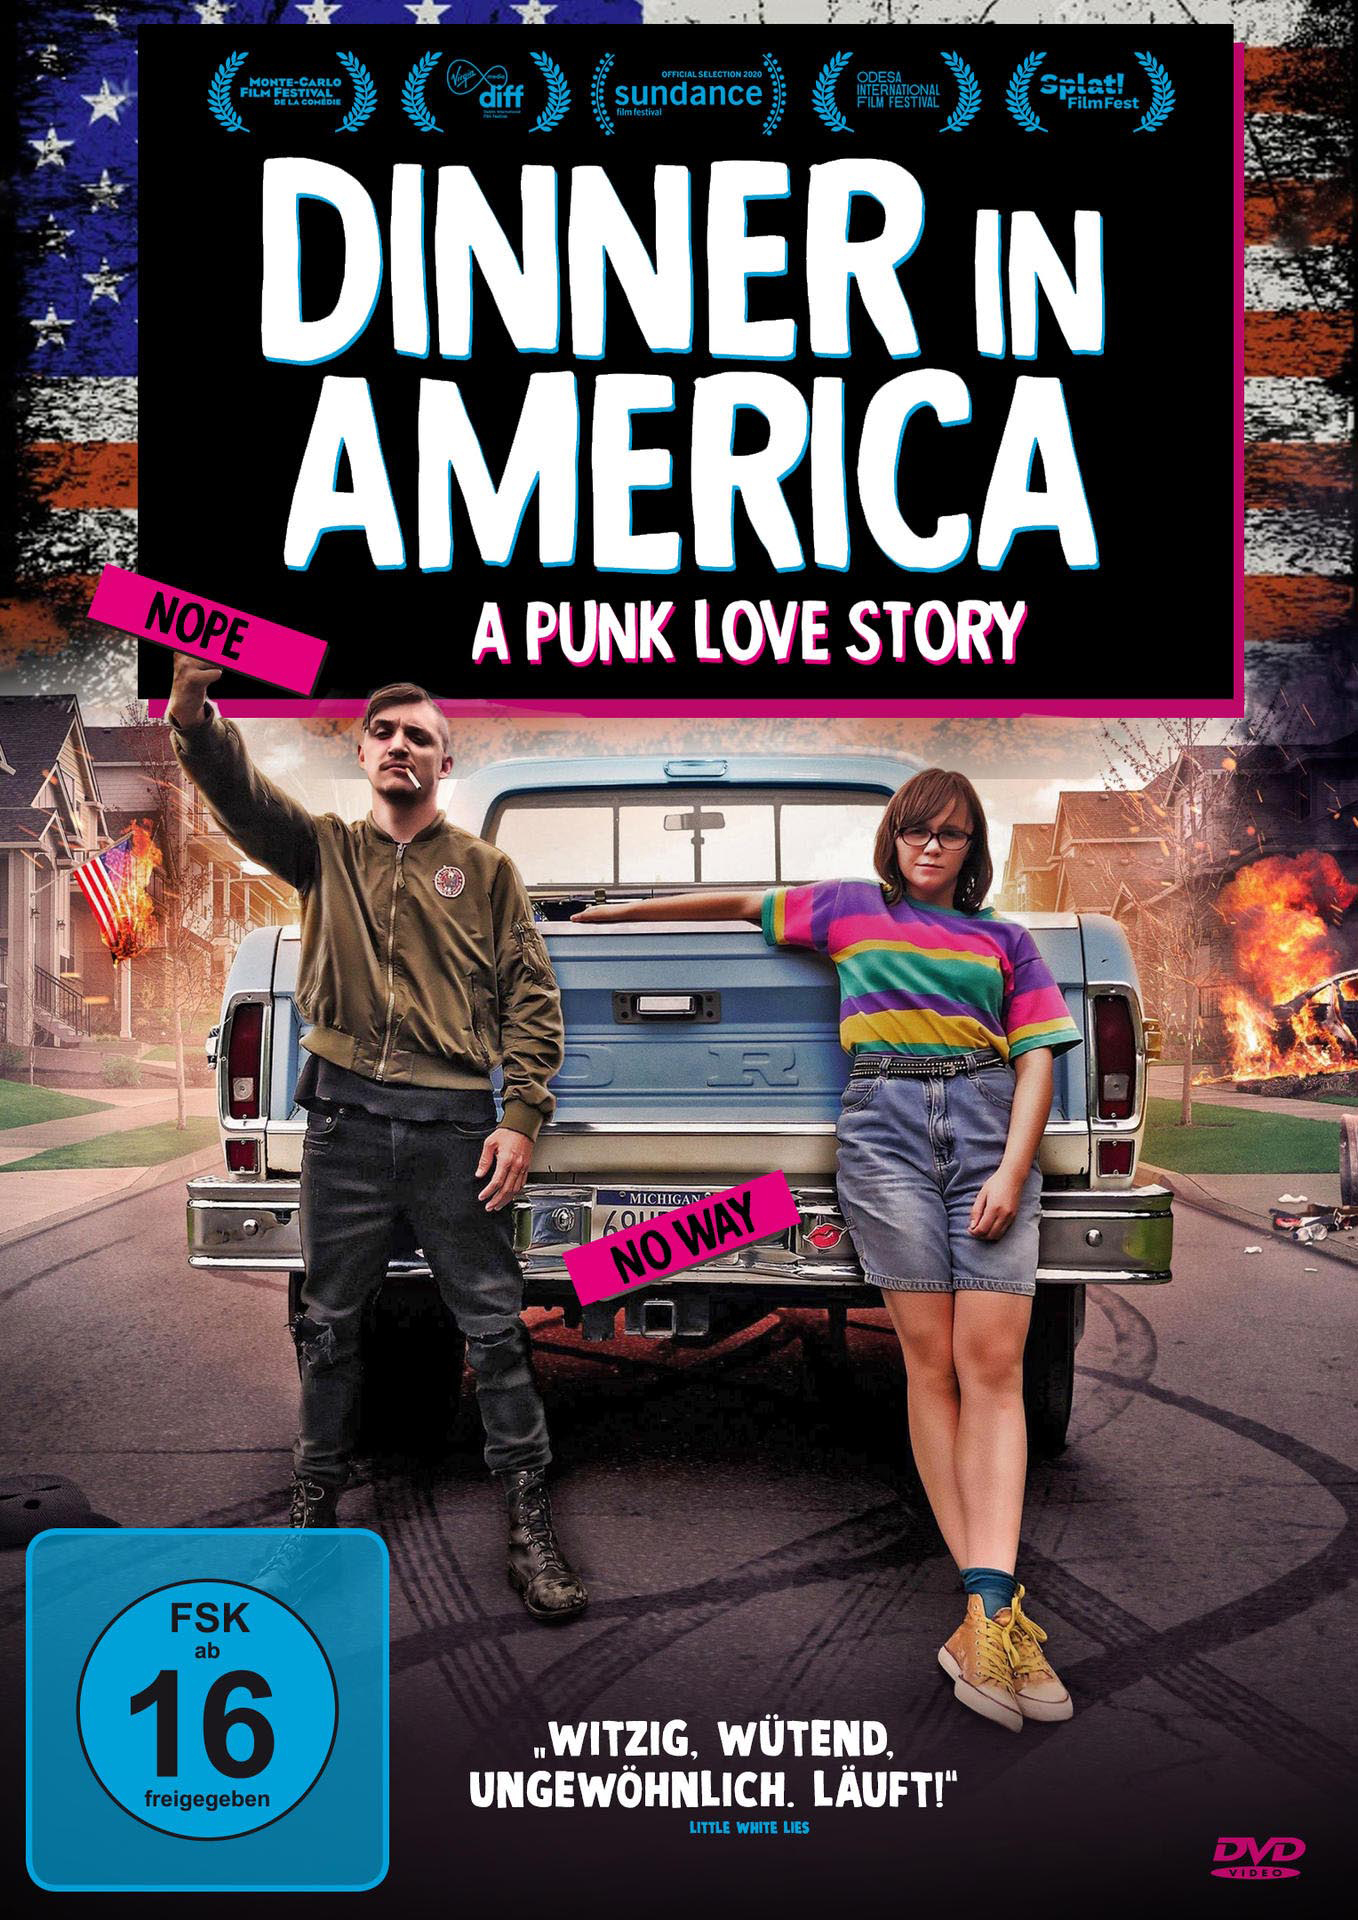 America Story - DVD Love in Punk A Dinner